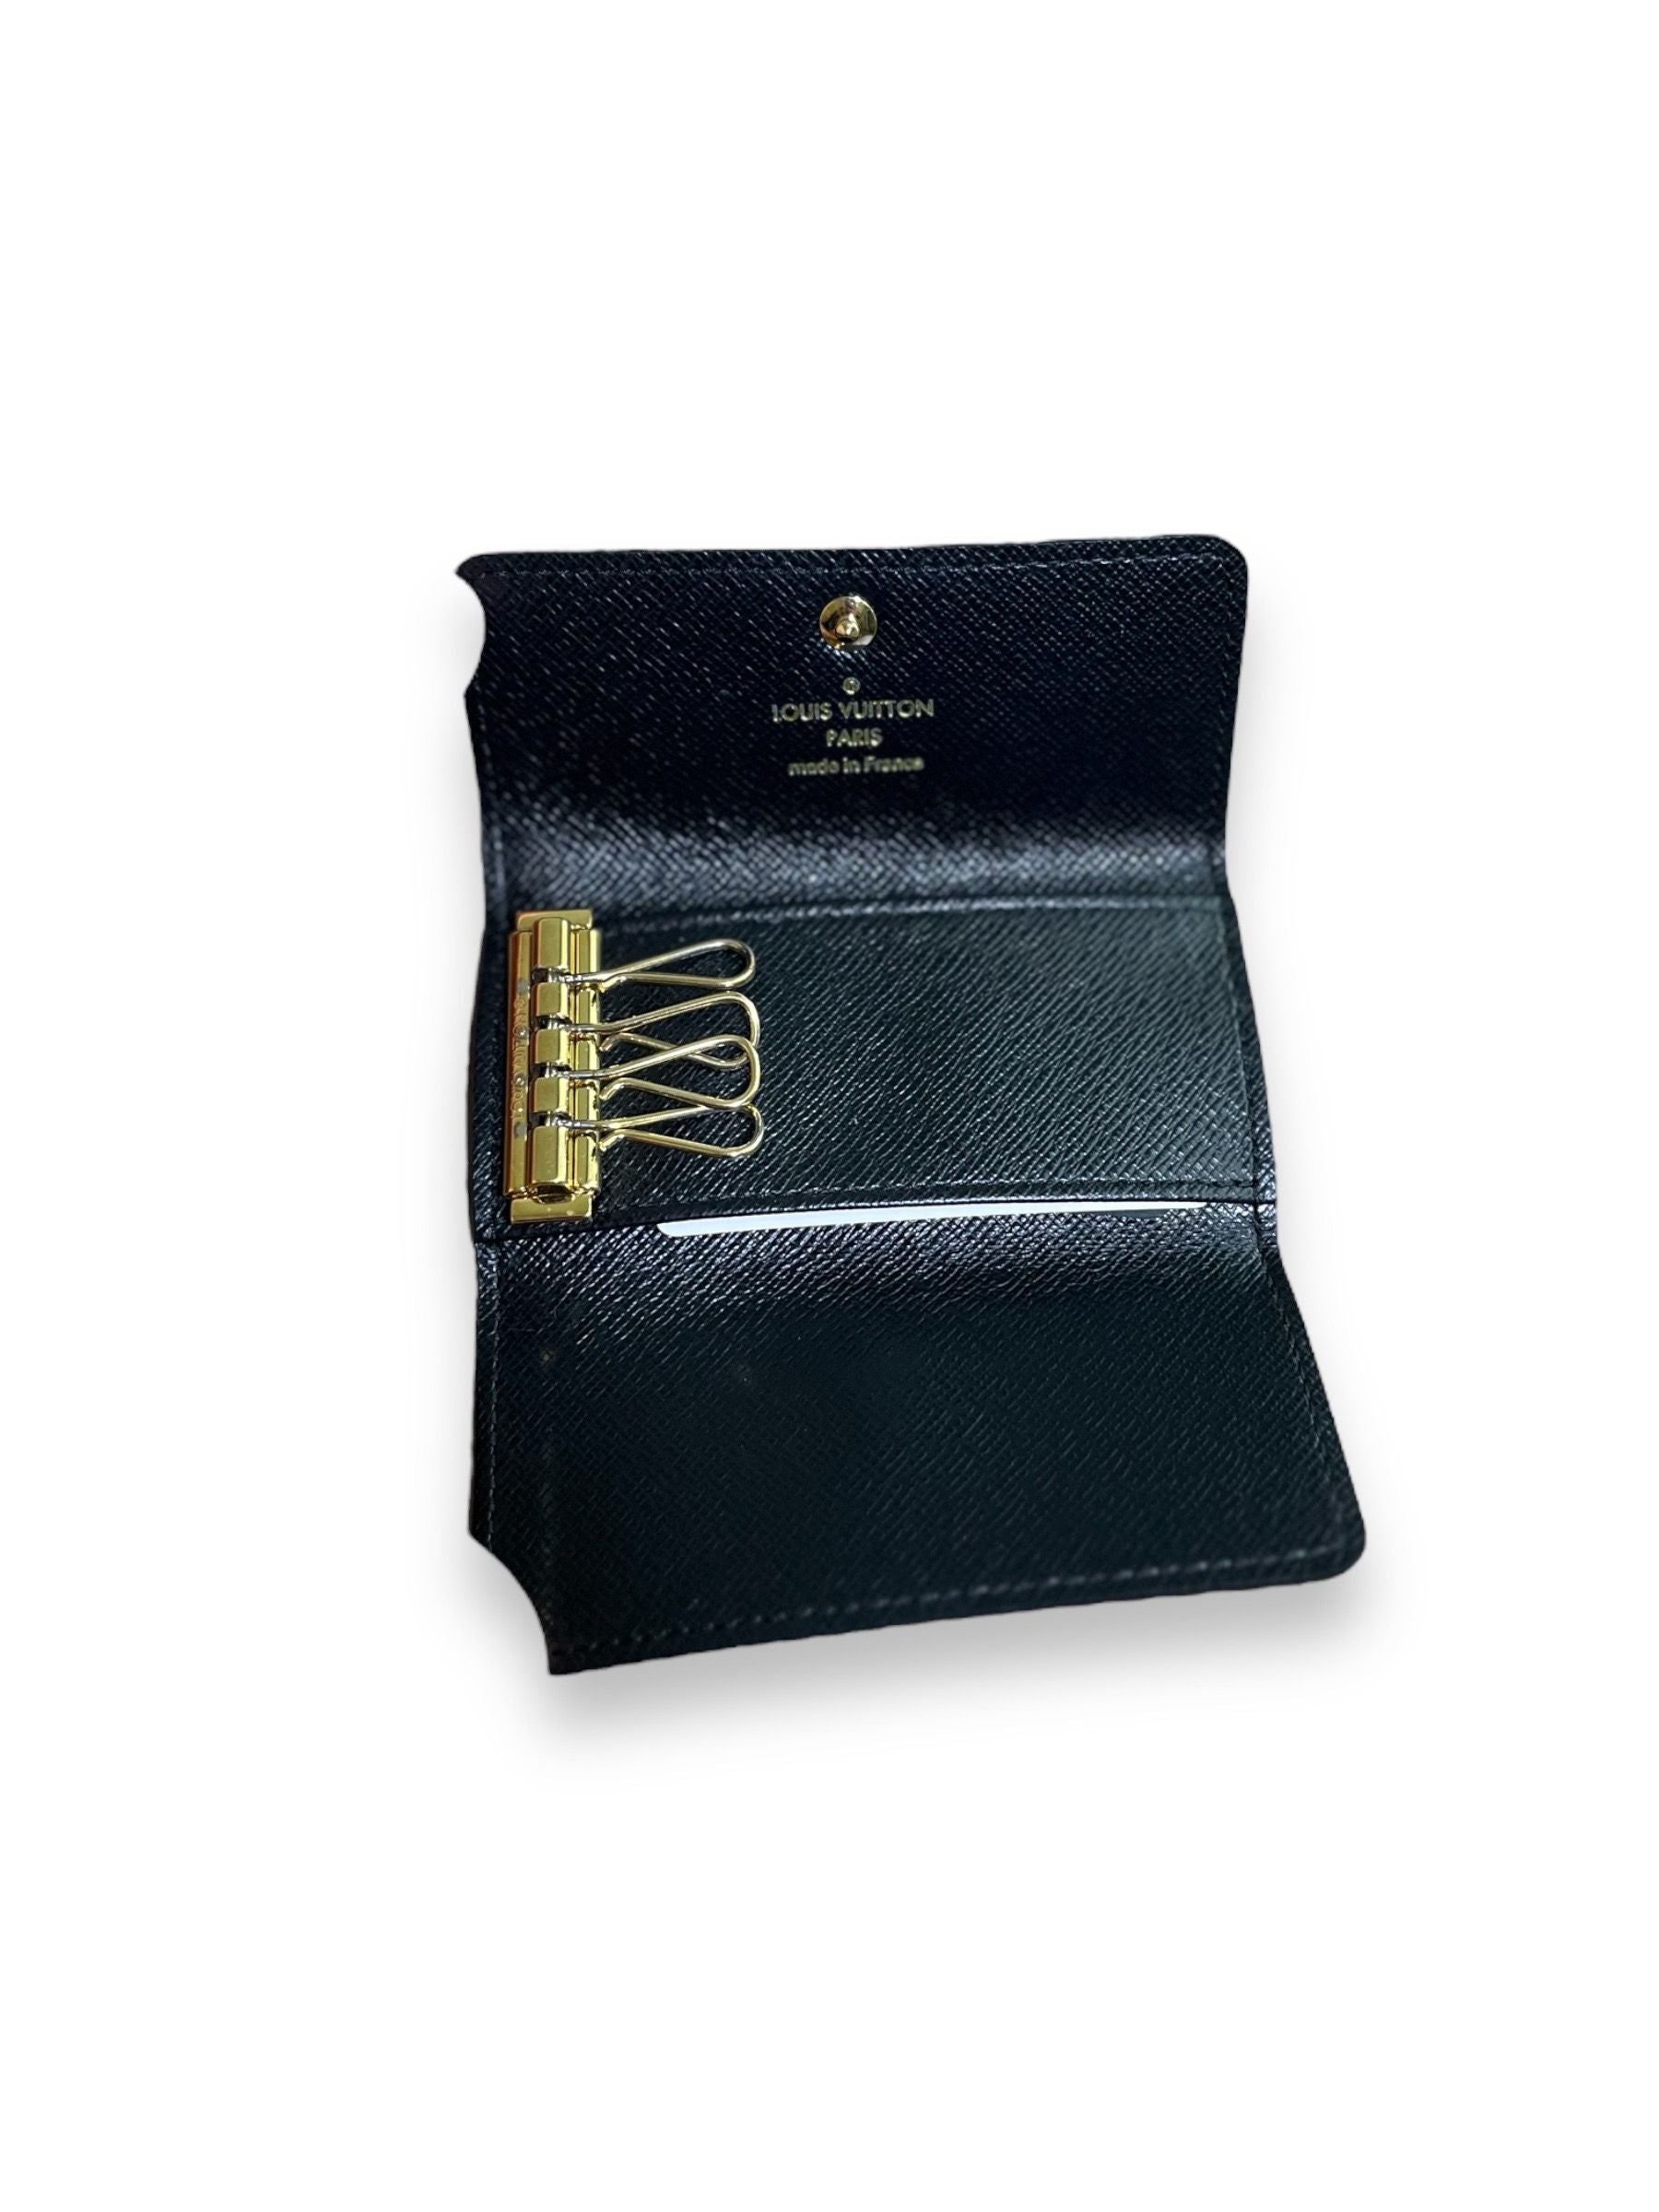 Louis Vuitton Monogram Empreinte 6 Key Holder, Black, One Size